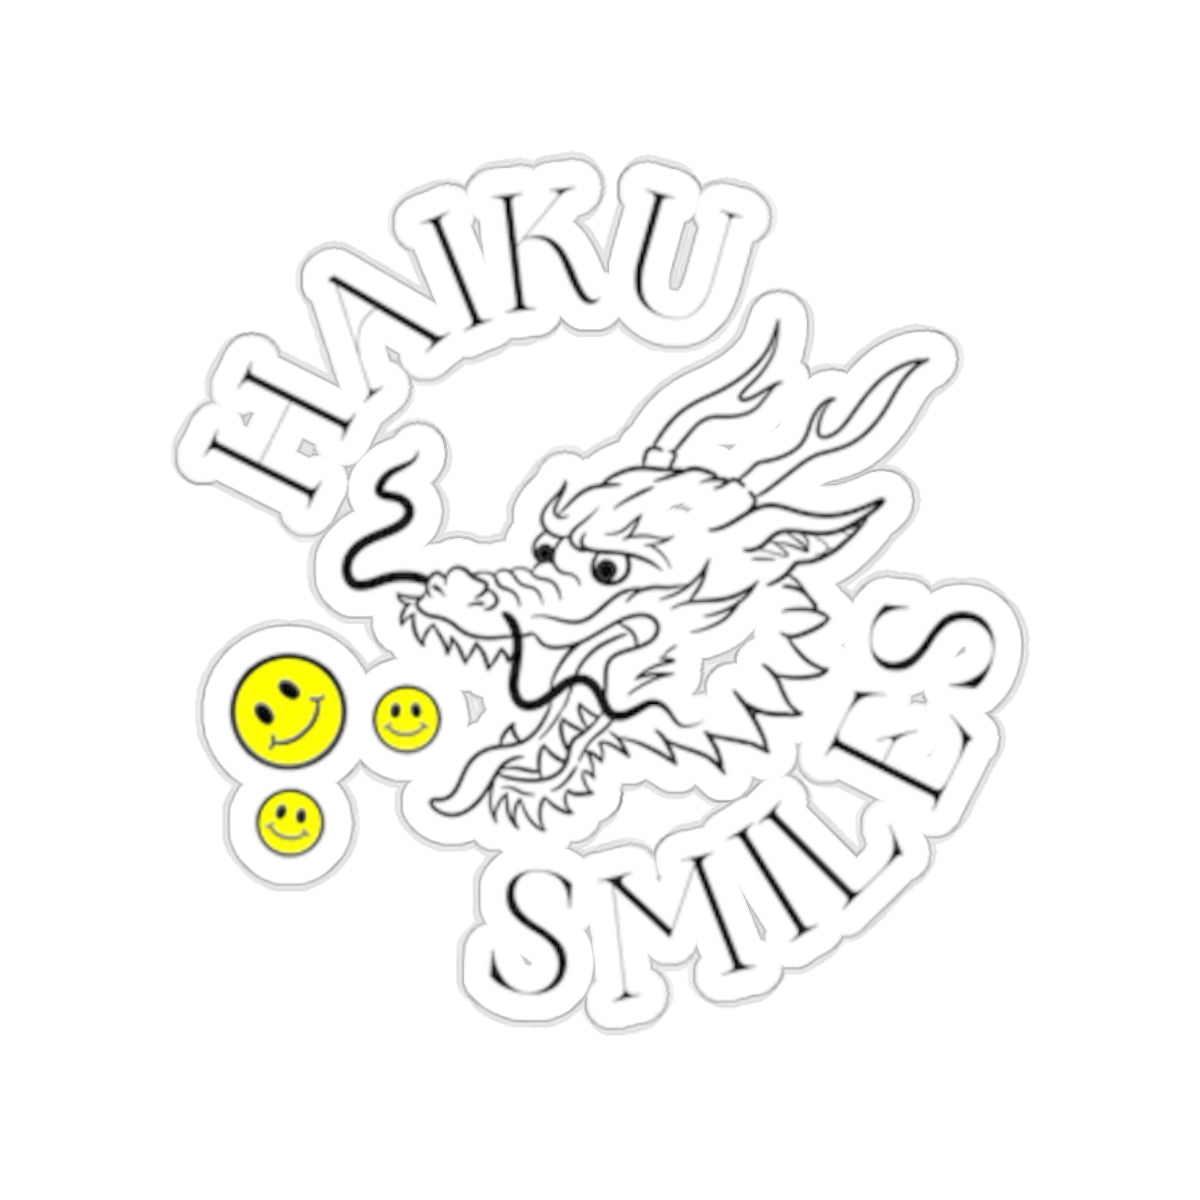 Haiku Smiles - Kiss-Cut Stickers